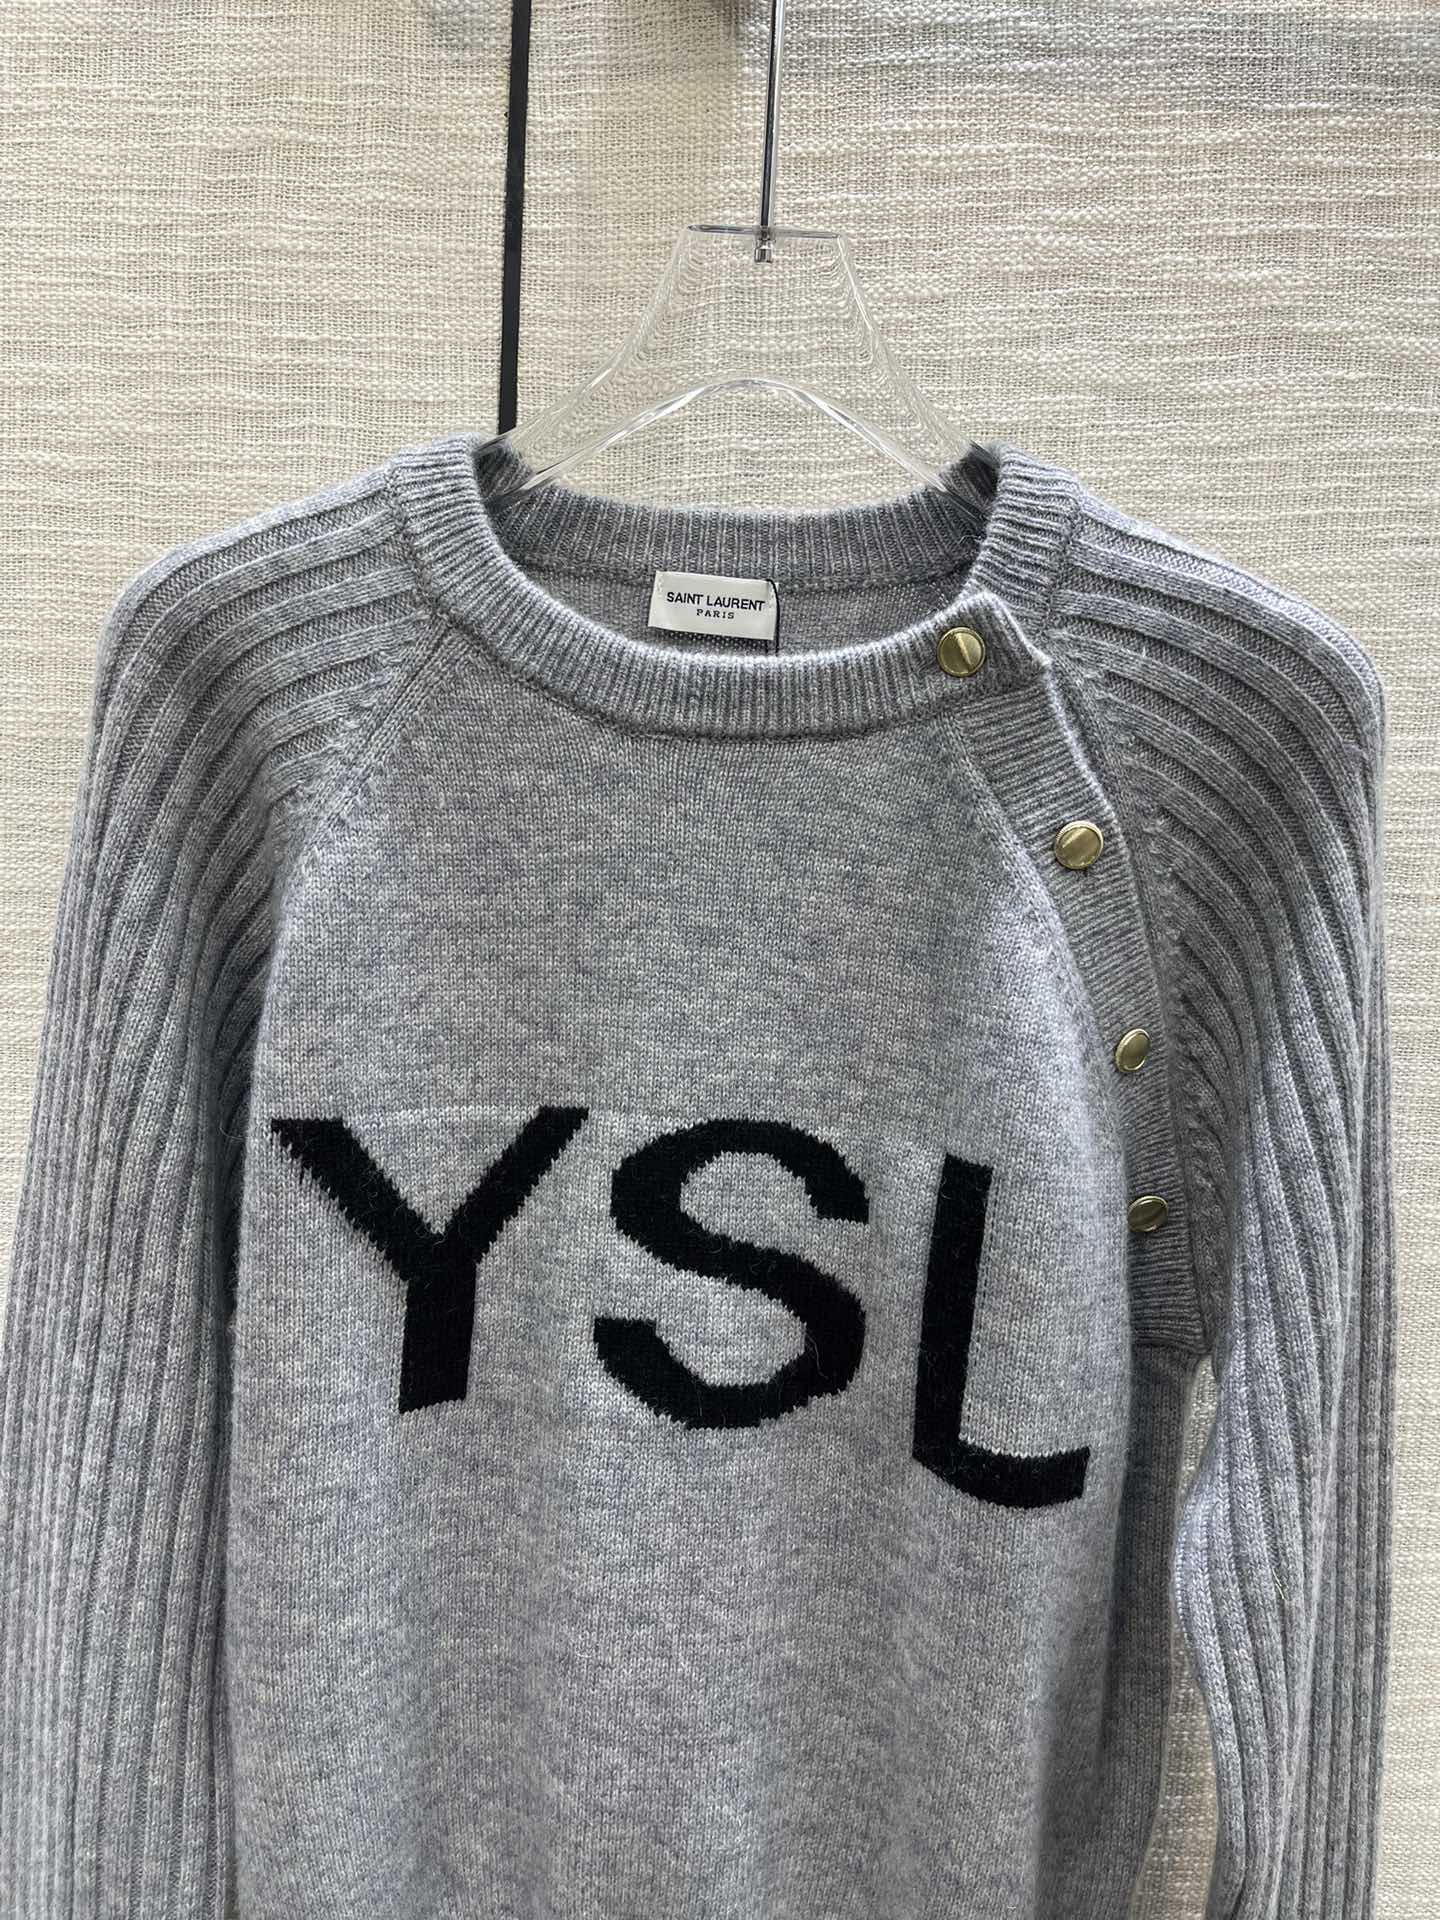 YSL サンローラントップスコピー セーター 秋冬トップス 温かい シンプル コットン 3色 グレイ_2